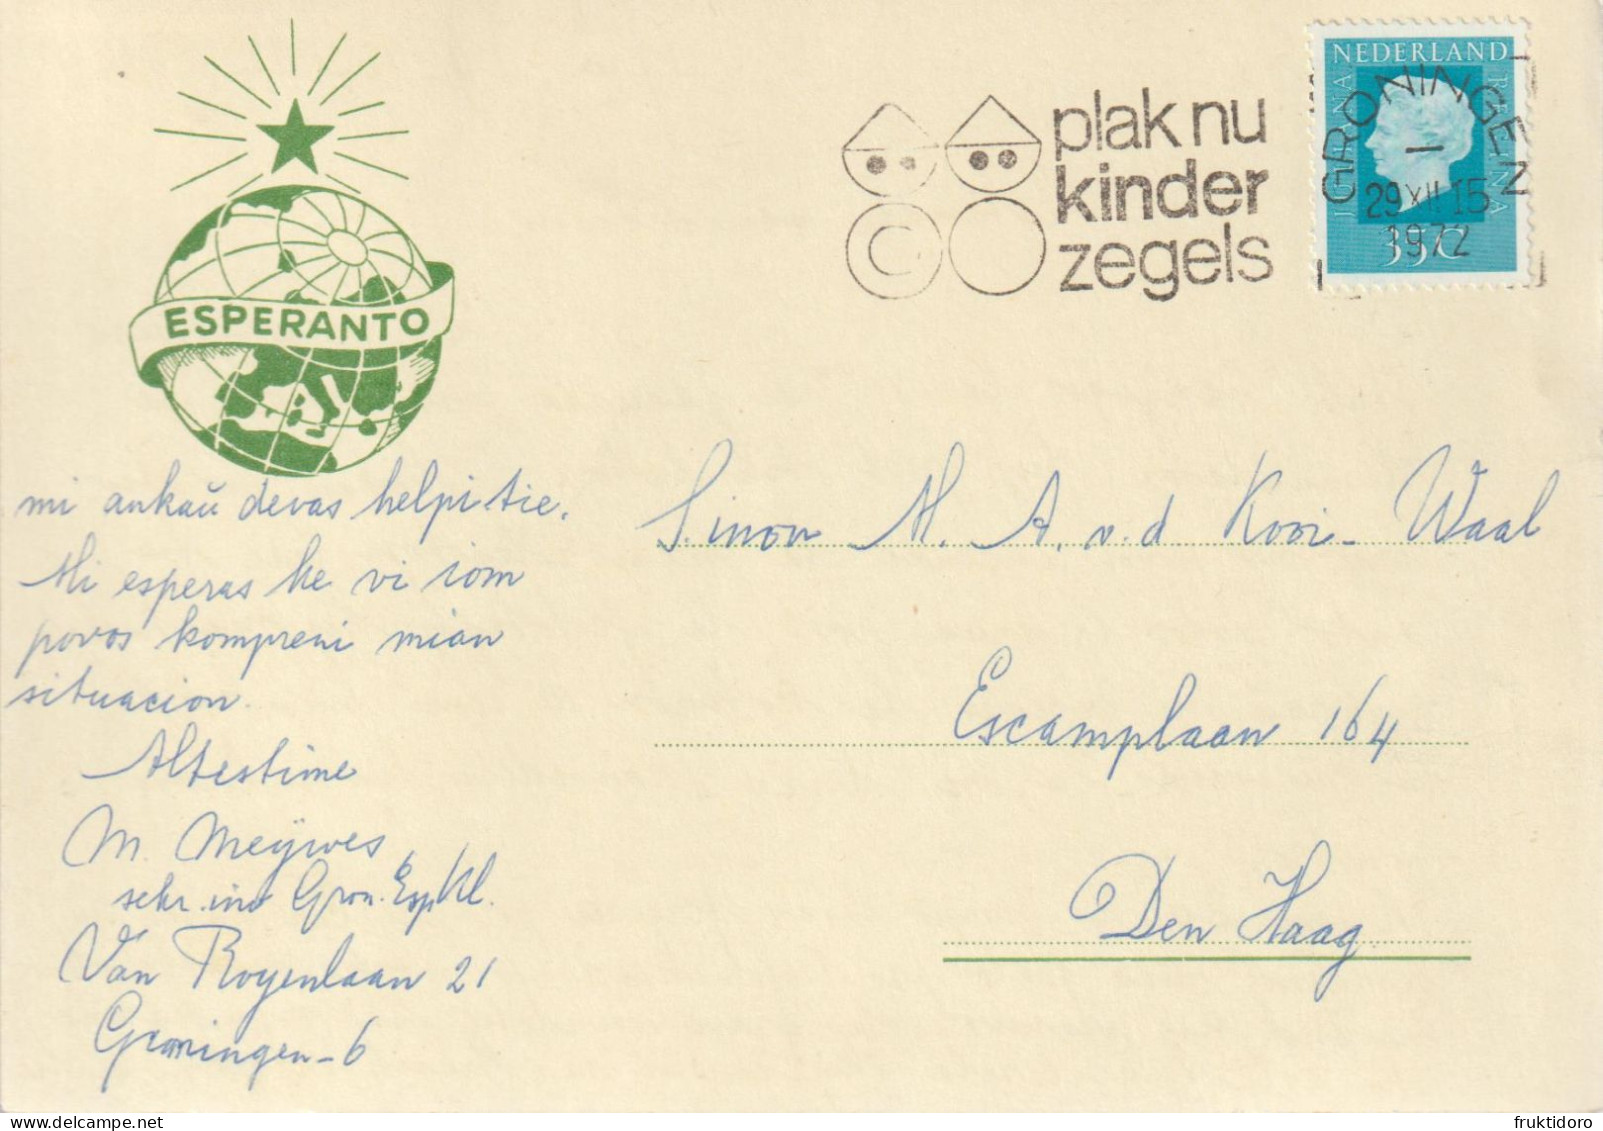 AKEO 40 Esperanto Card The Netherlands Special Cancellation - Karto El Nederlando 1972 - Esperanto